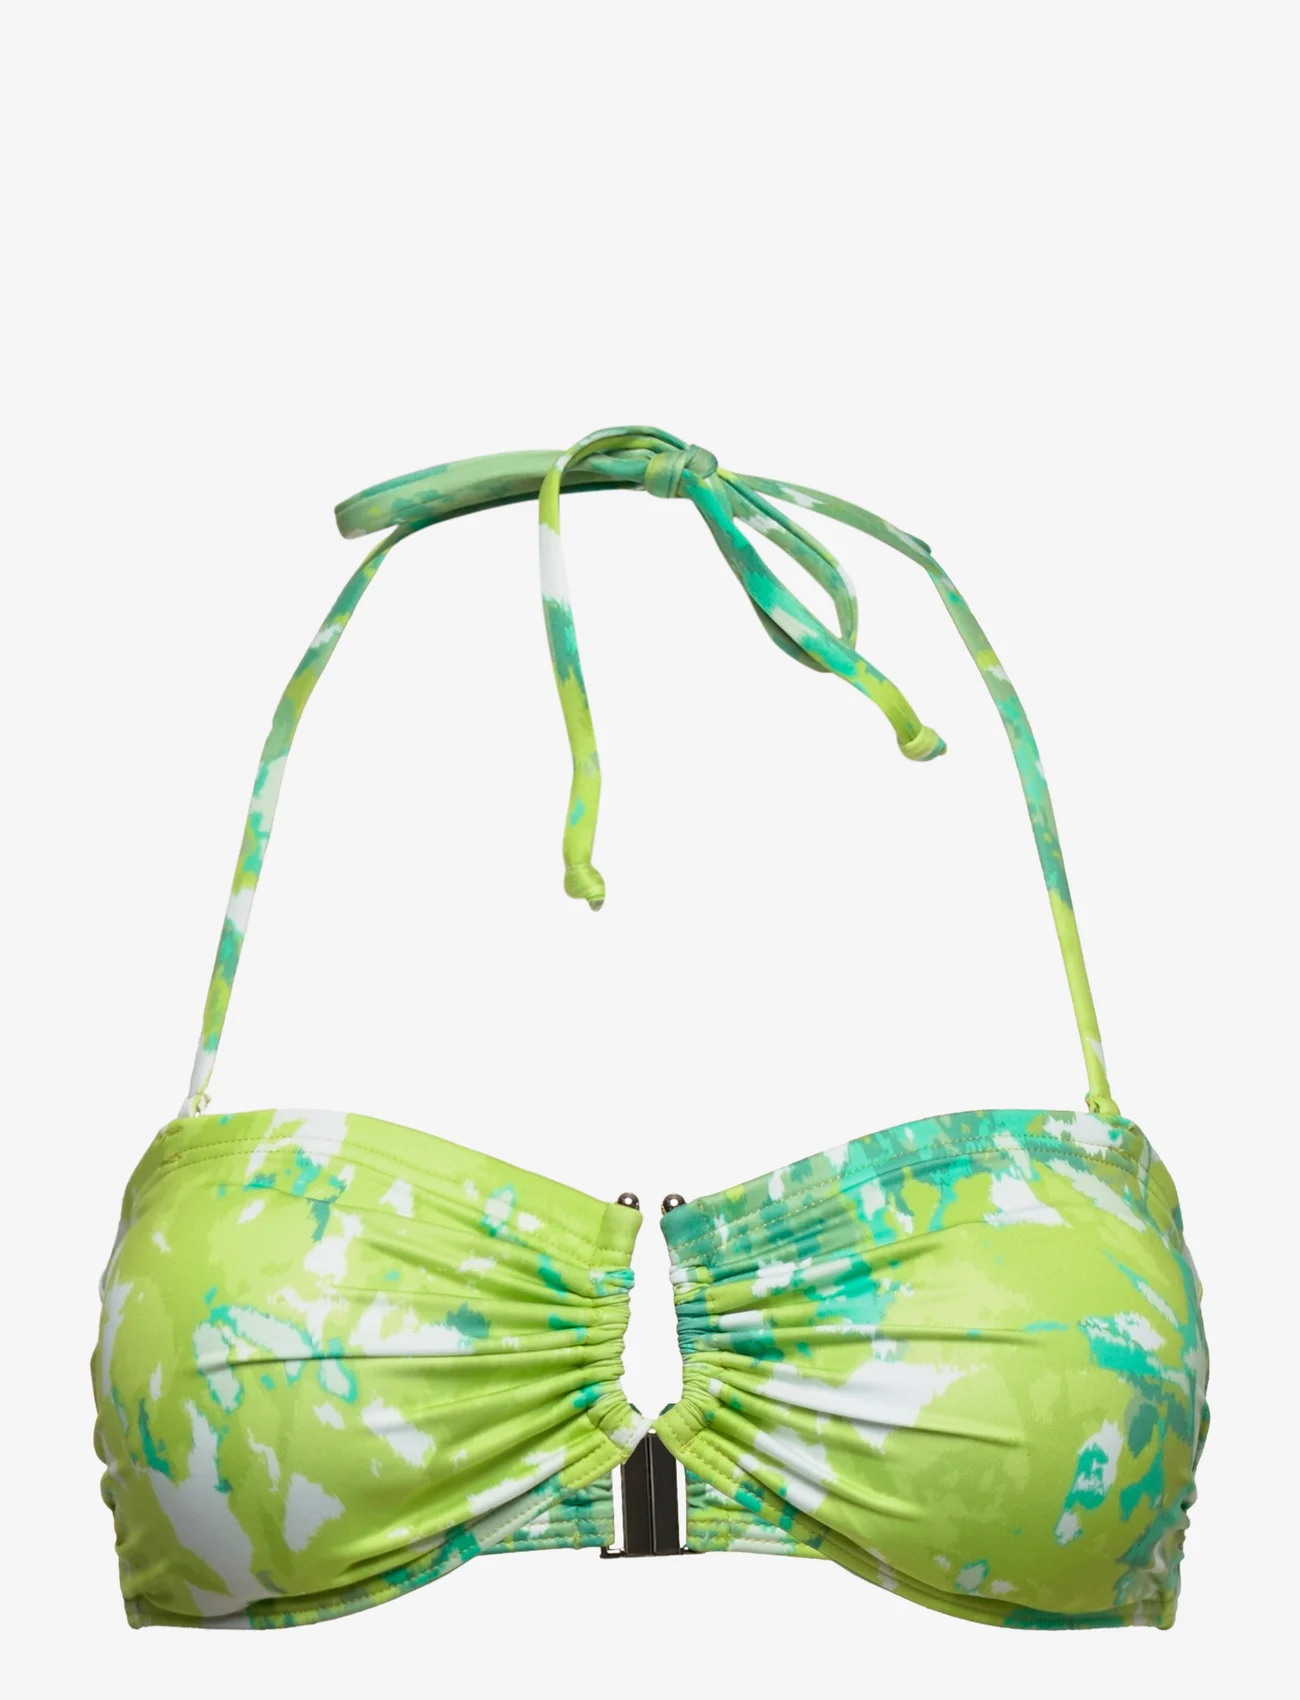 Gestuz - CanaGZ bikini top - bandeau-bikinis - green splash - 1